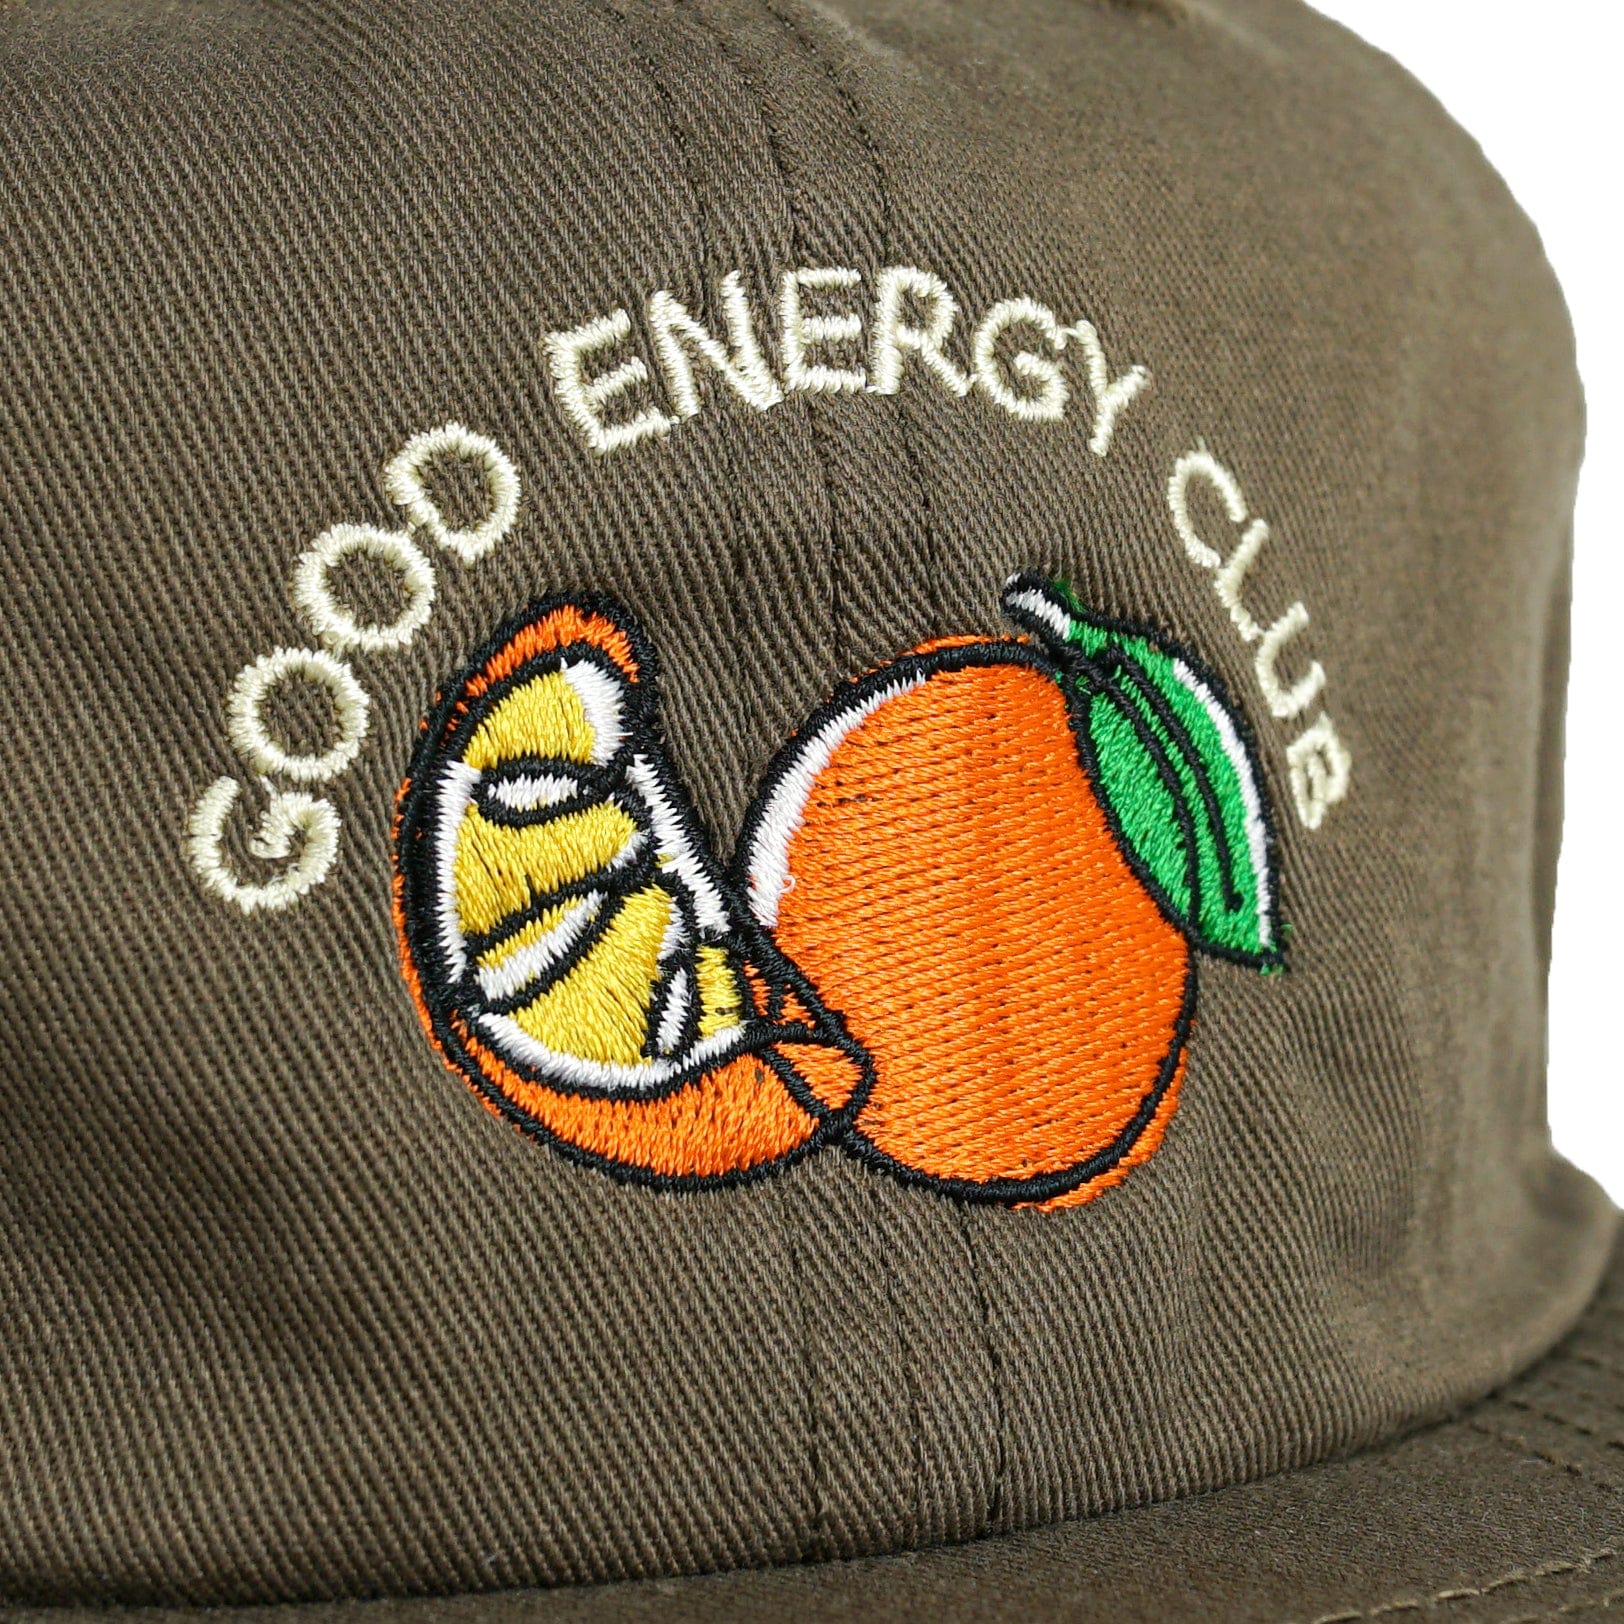 SOF Good Energy Club Classic Cap in walnut